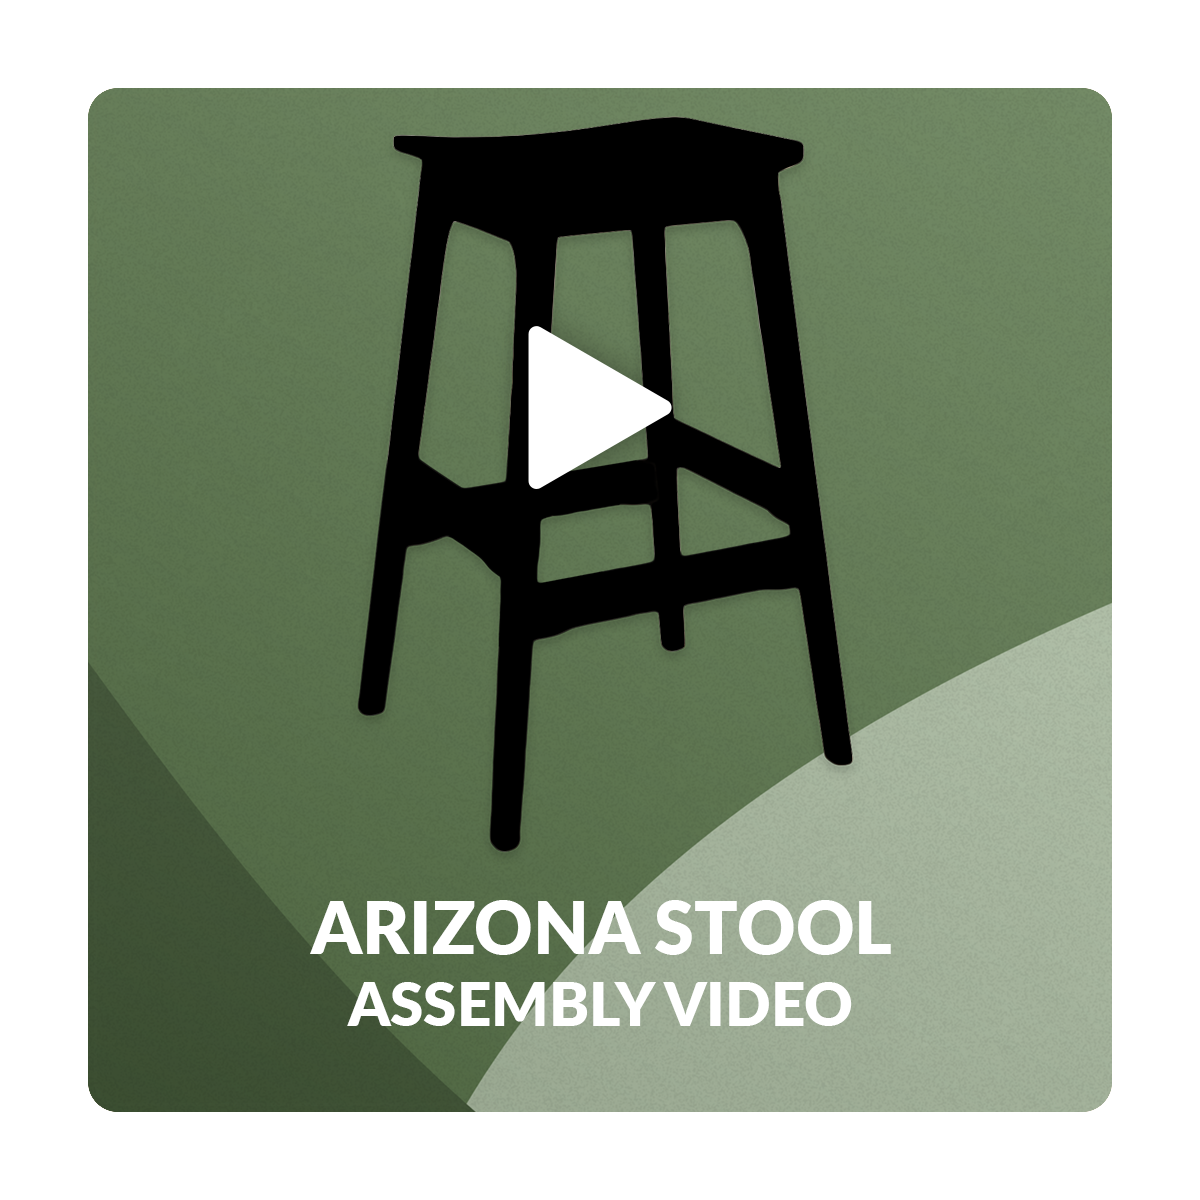 Arizona Stool